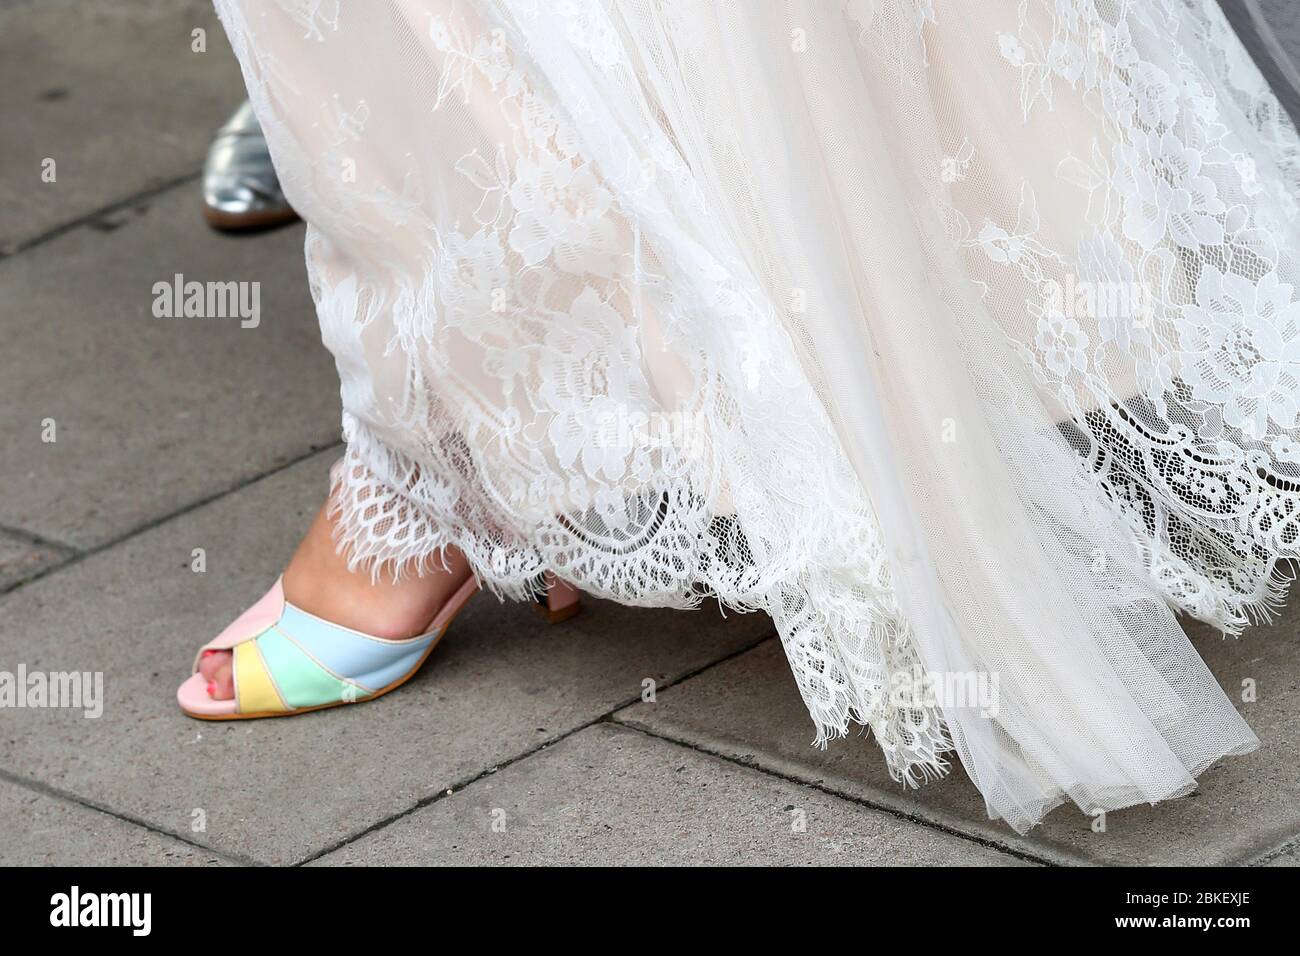 216 Wedding Shoe Game Questions For A Fun Wedding - Ada Jennifer